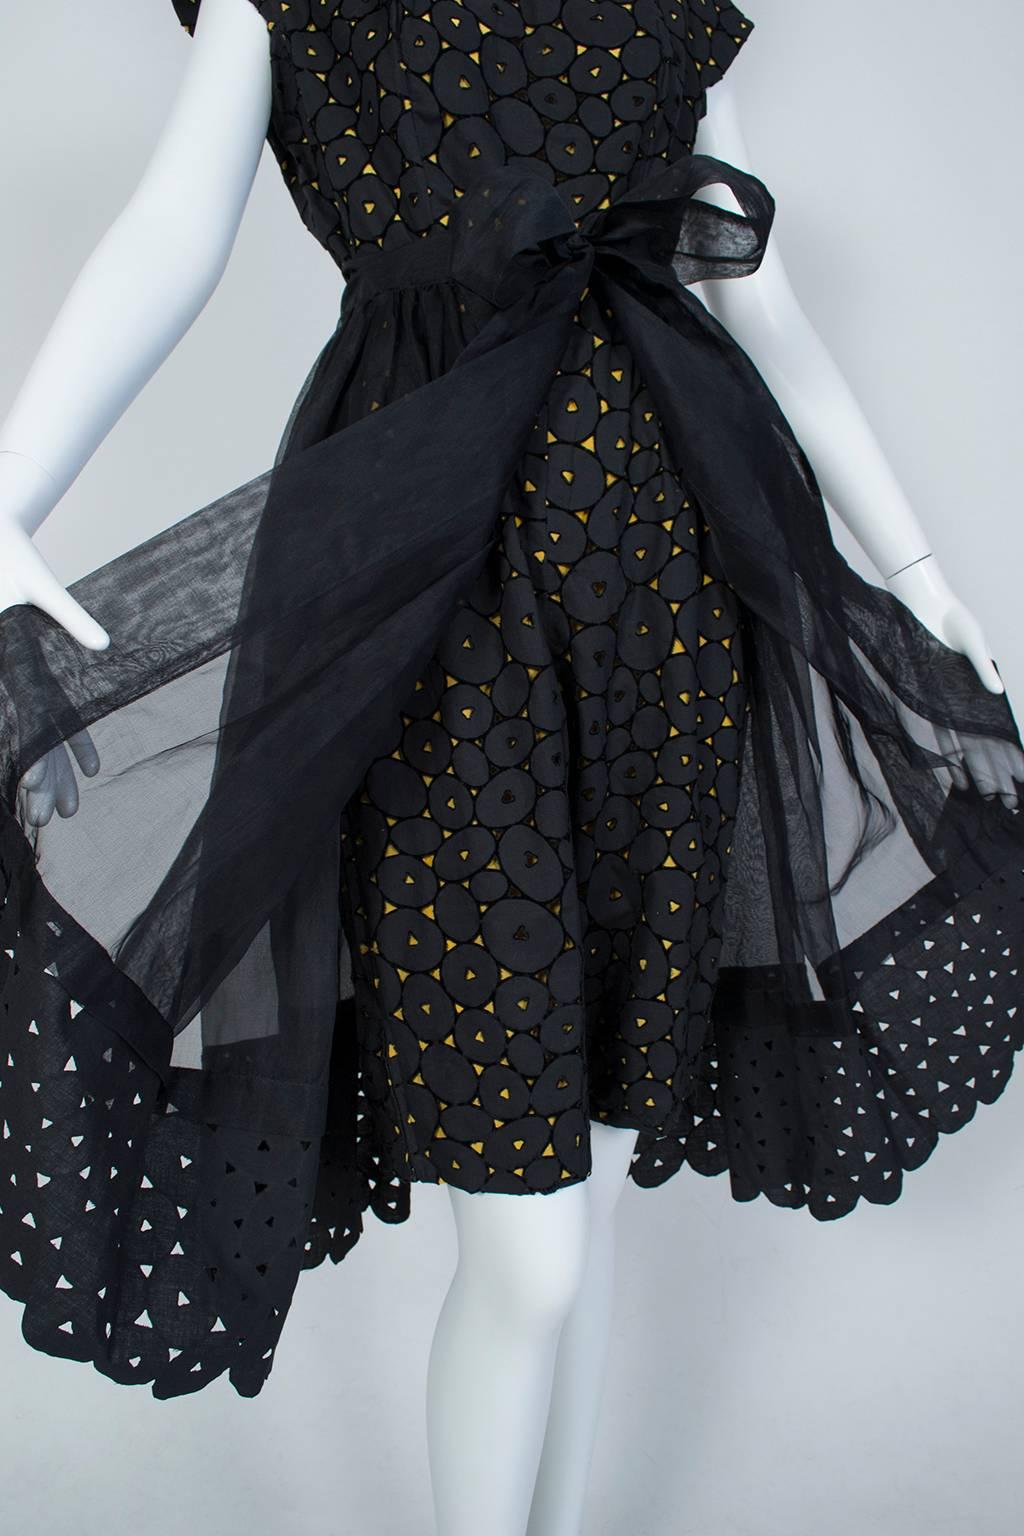 Black and Gold Eyelet Shorts Romper with Sheer Hostess Overskirt - Medium, 1950s 6